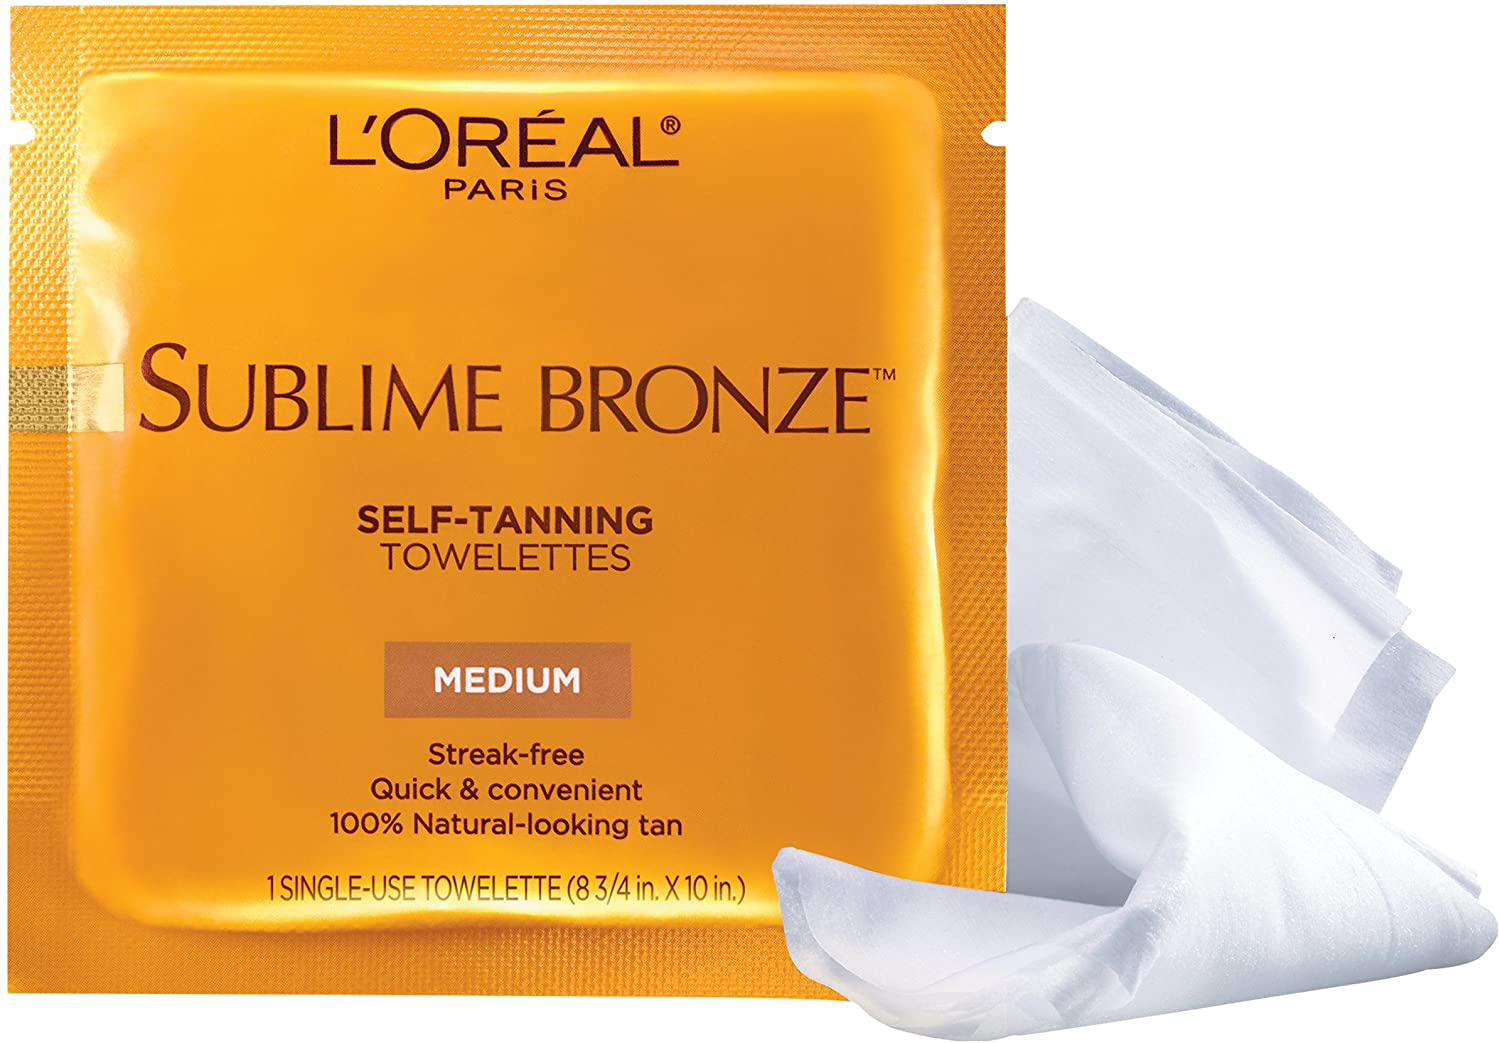 L'Oreal Paris Skincare Sublime Bronze Self-Tanning Towelettes, Streak-Free, Natural Looking Tan, 6 ct.